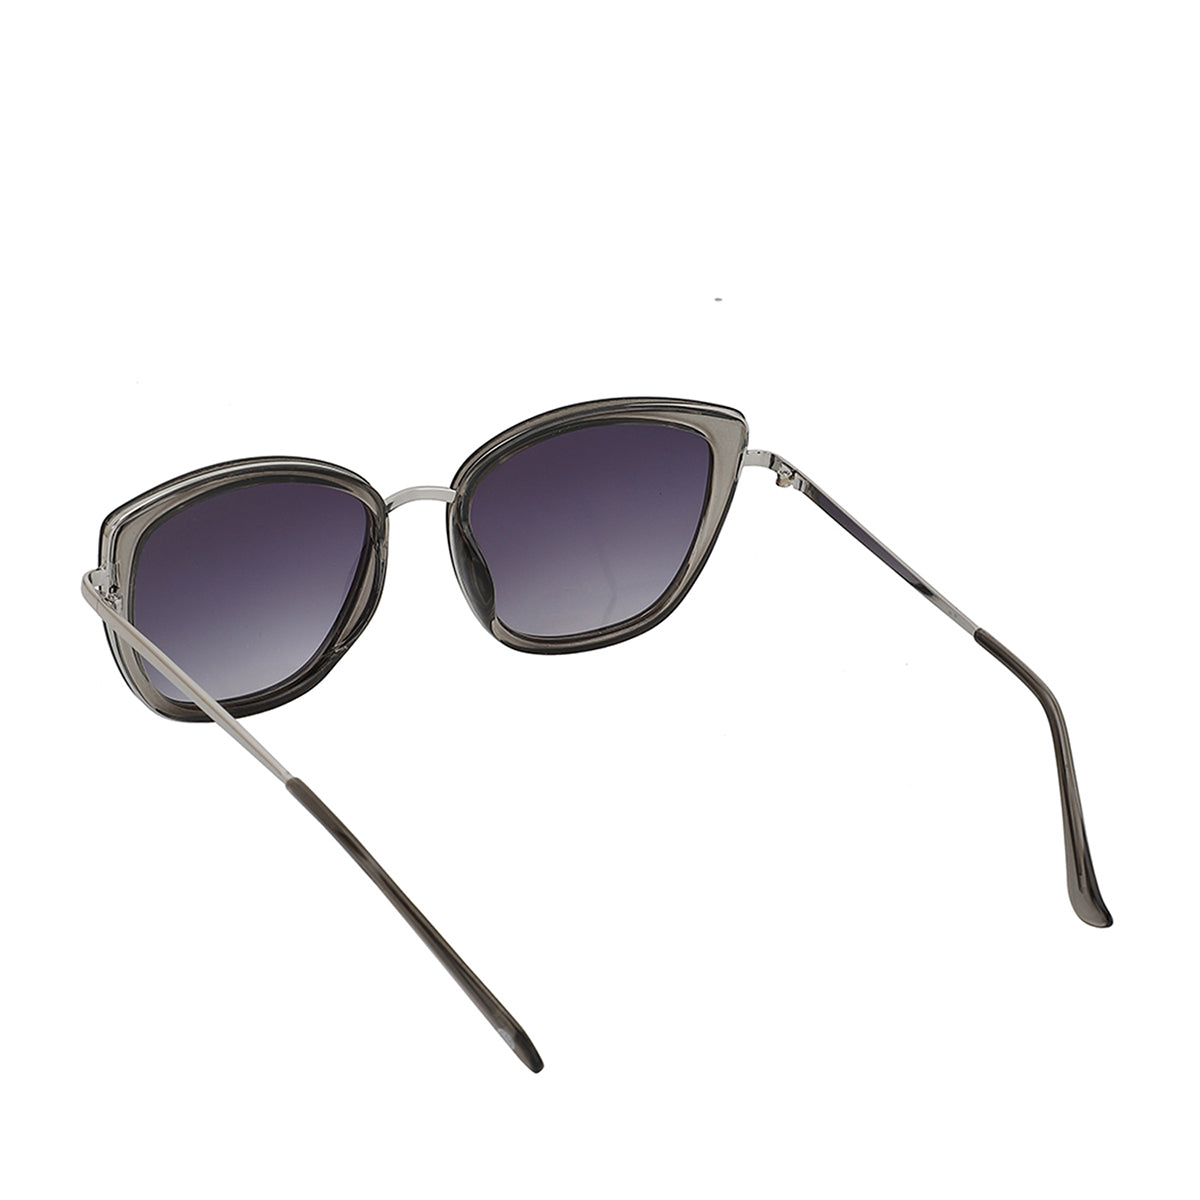 Carlton London Silver Toned Uv Protected Cateye Sunglasses For Women